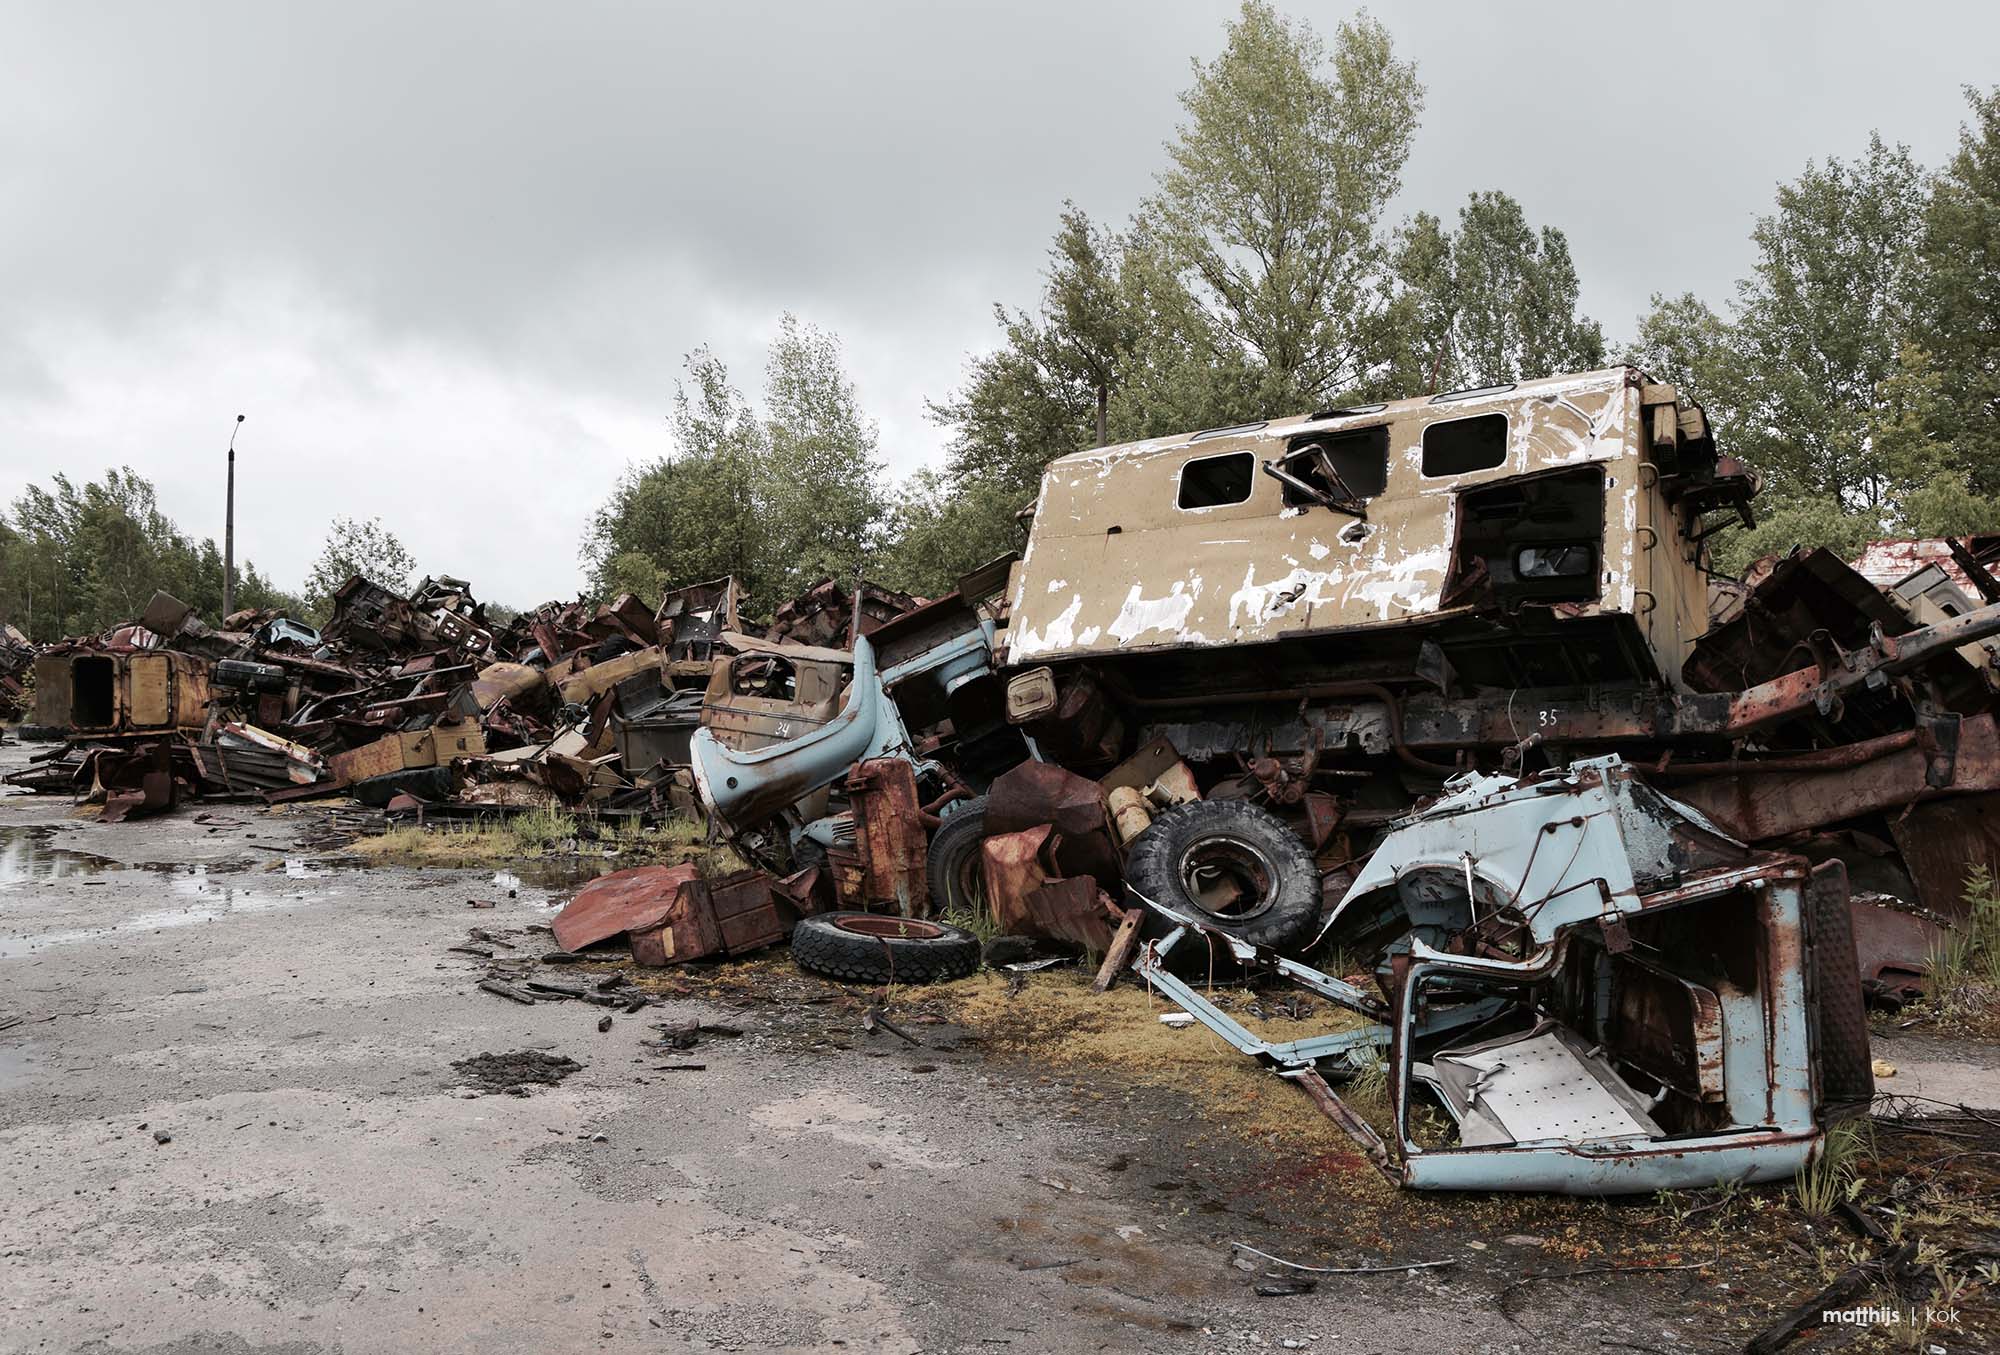 Vehicle Graveyard, Chernobyl | Photo by Matthijs Kok